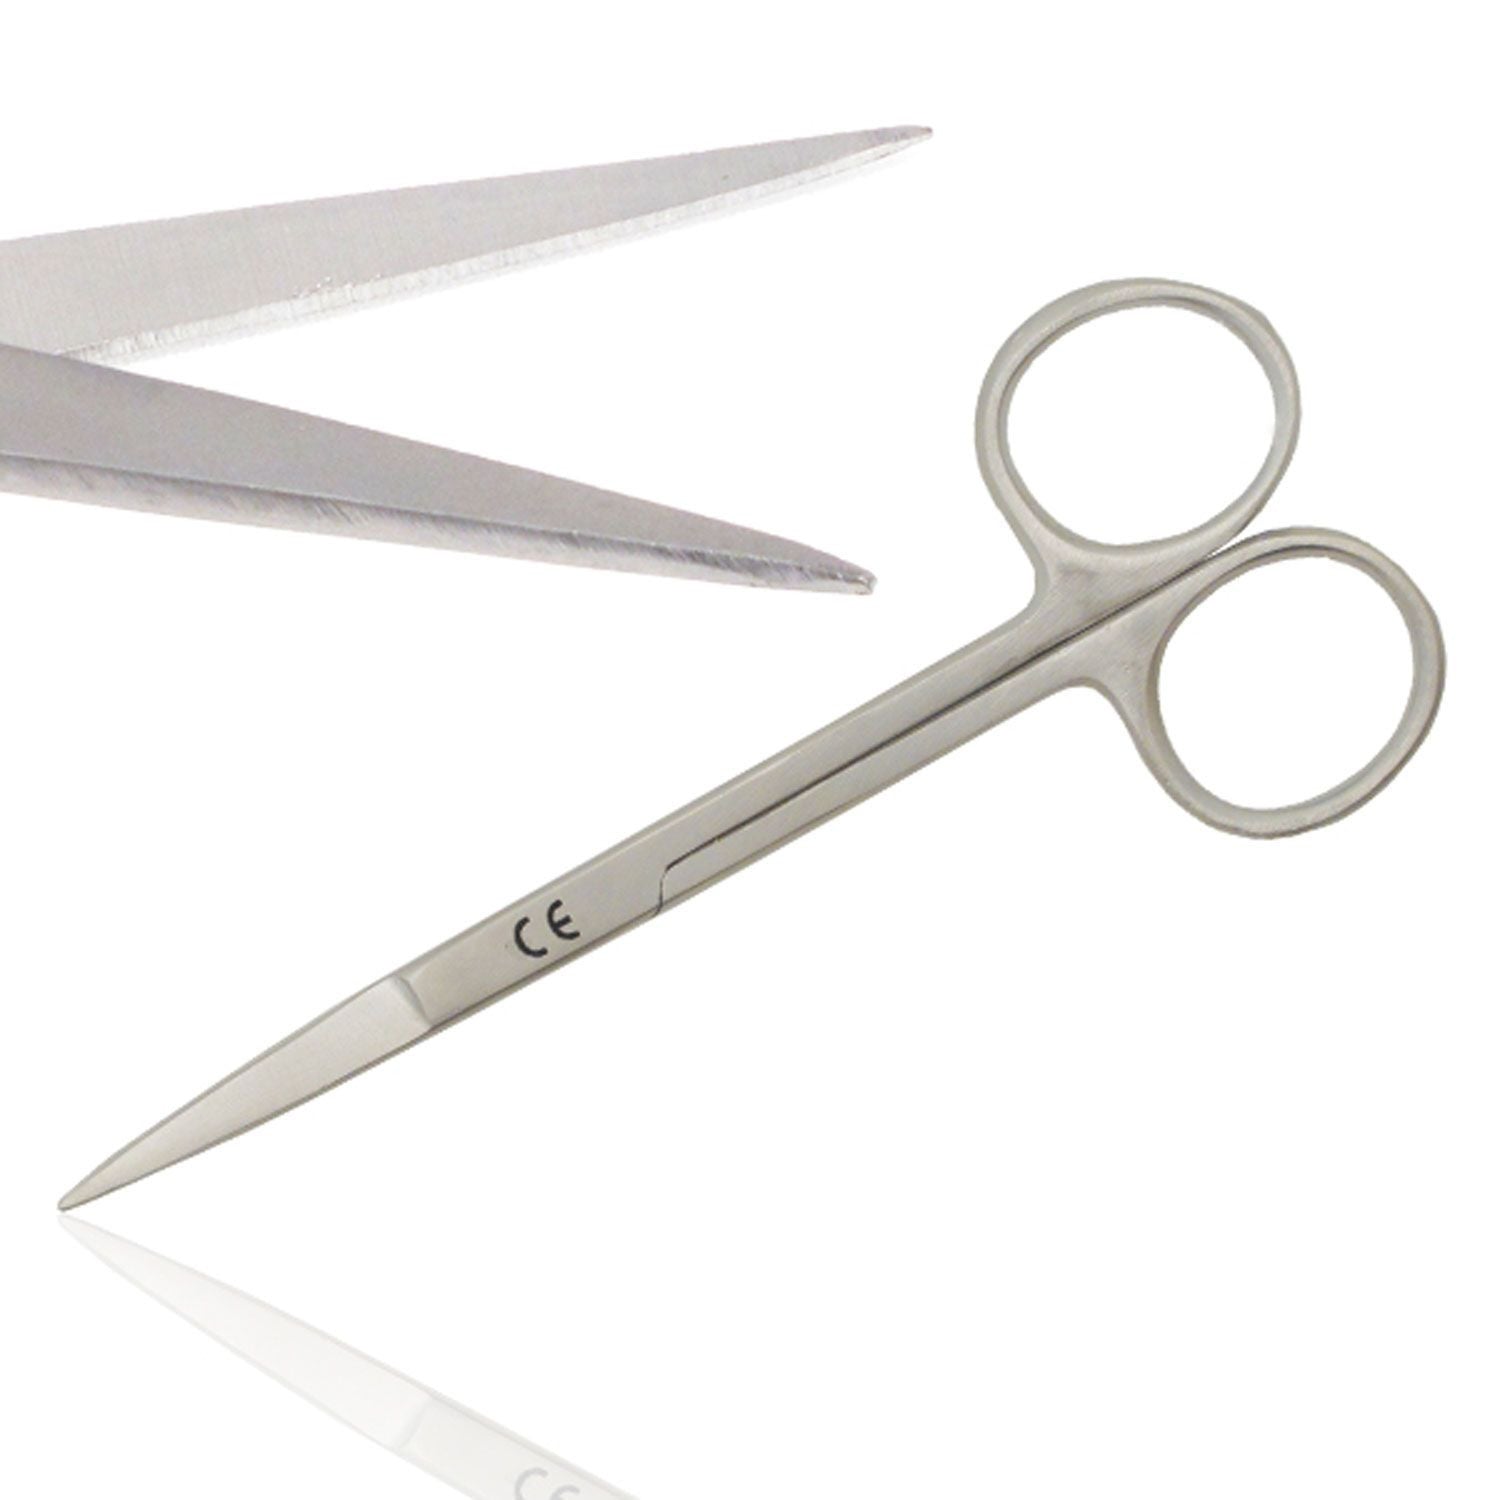 Instramed Iris Scissors | Straight | 11.5cm | Single